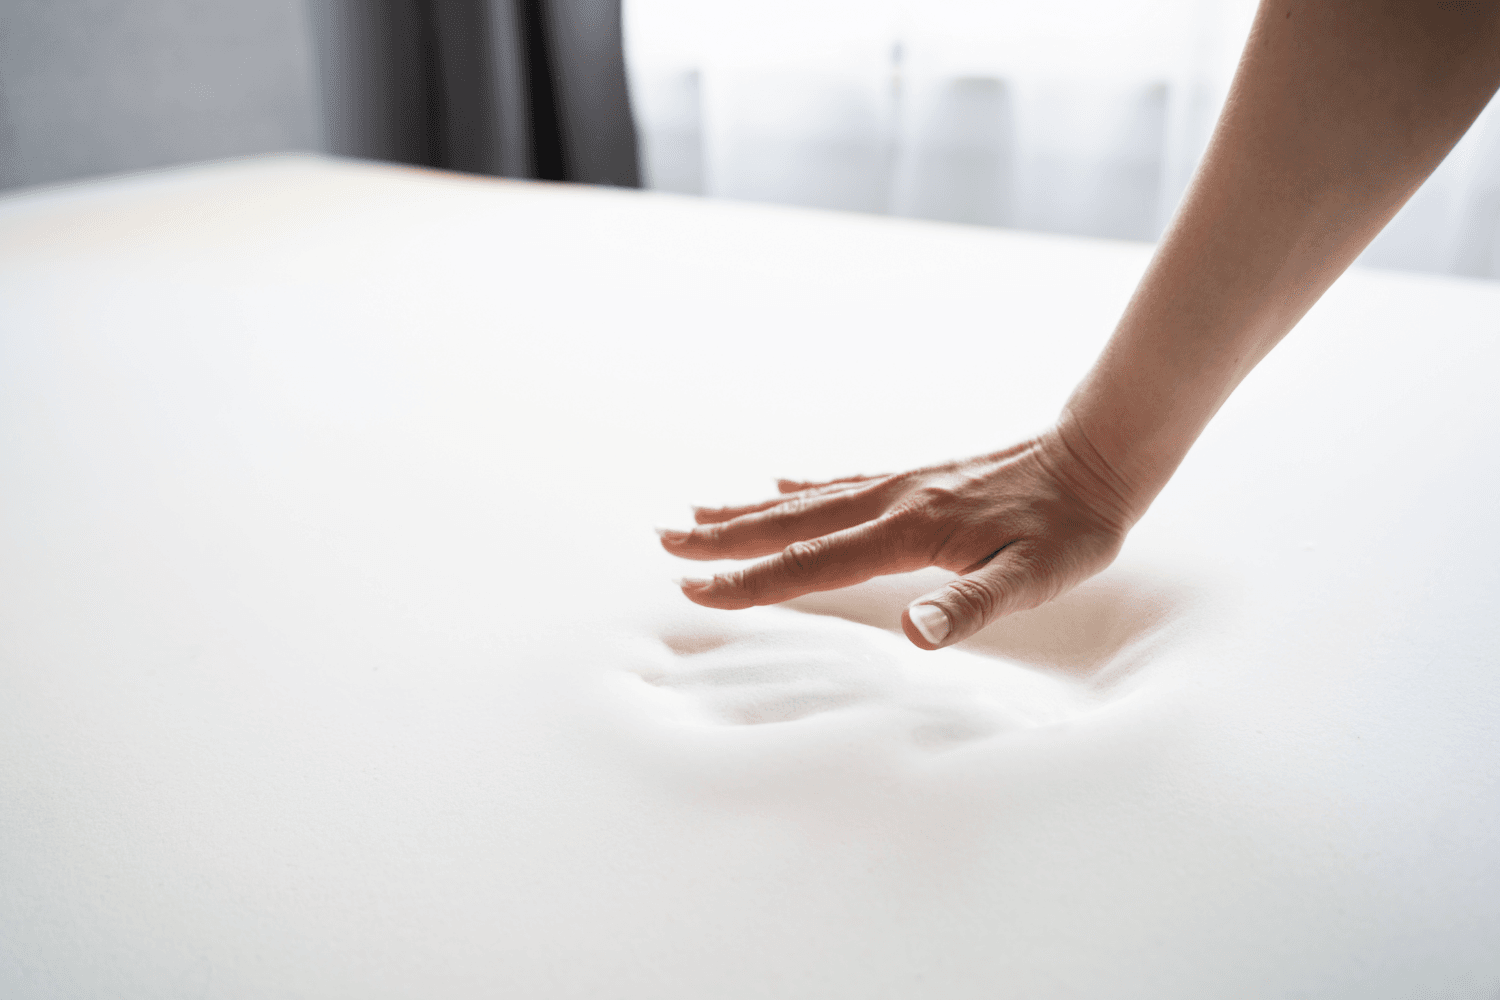 Hand pressing against mattress